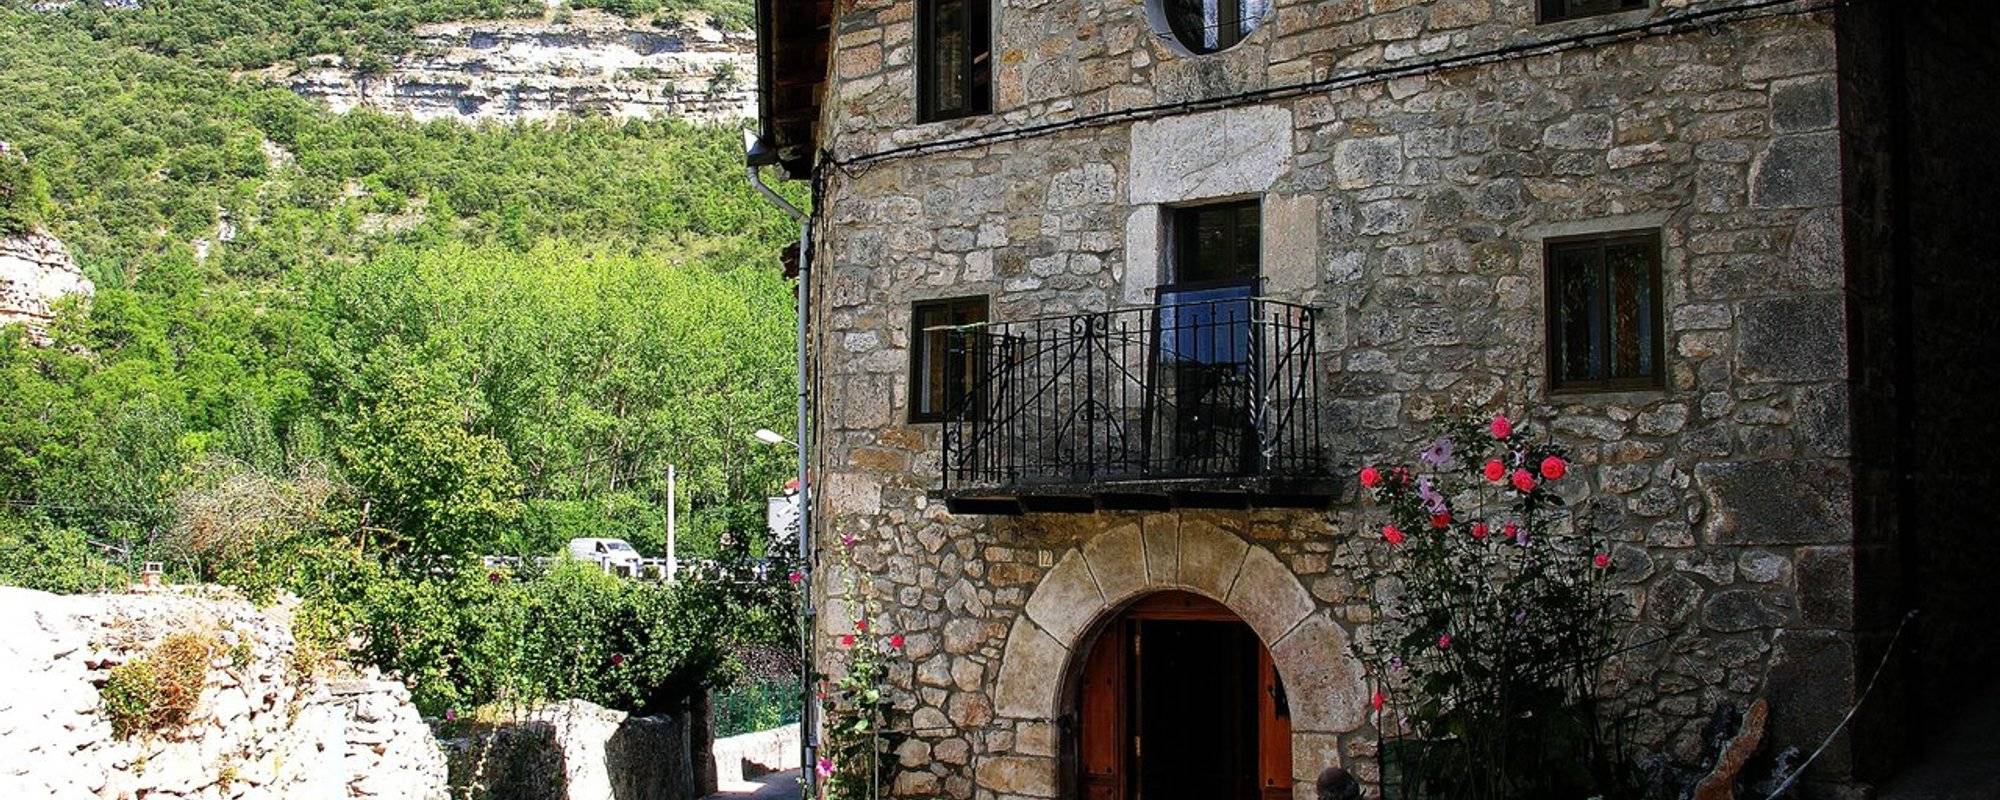 Charming Spanish villages: Quintanilla Escalada, Burgos